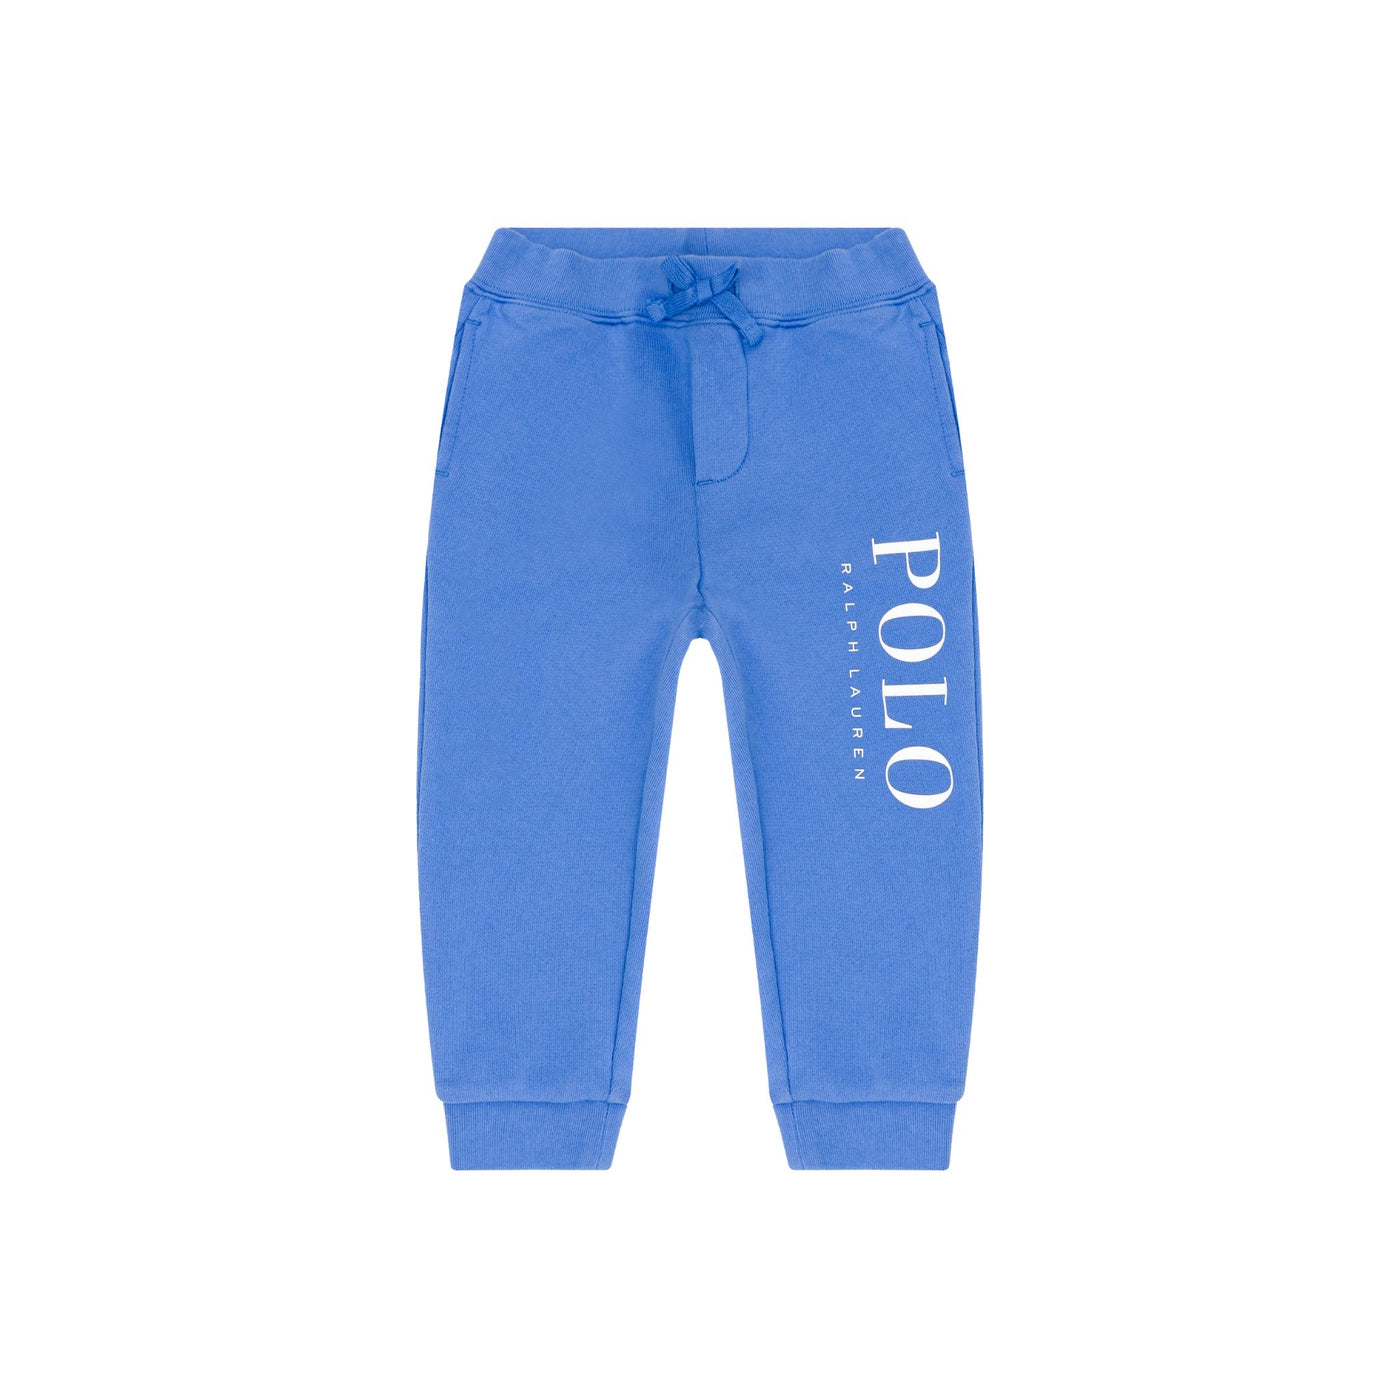 Pantalone Neonato Bambino Polo Ralph Lauren